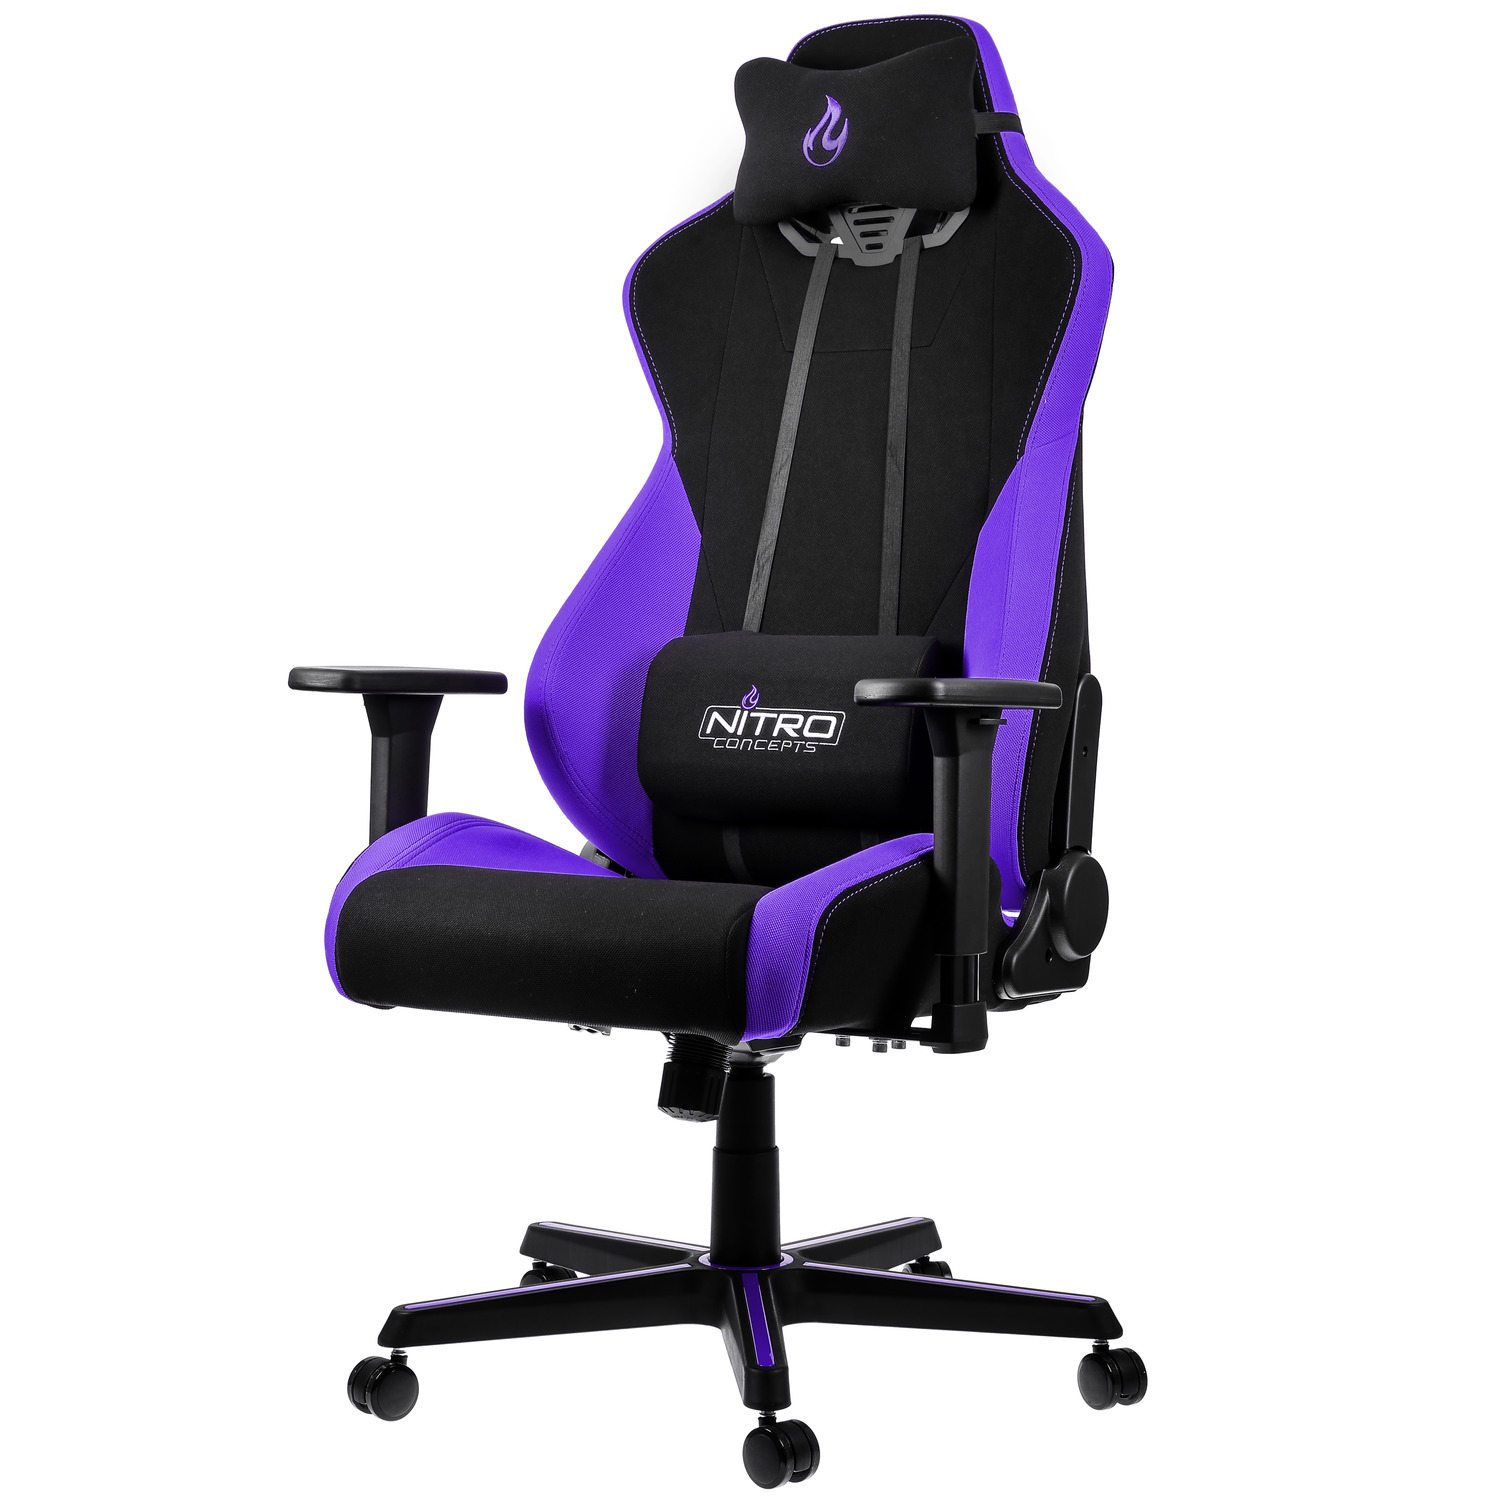  - S300 Gaming Chair Nebula Purple